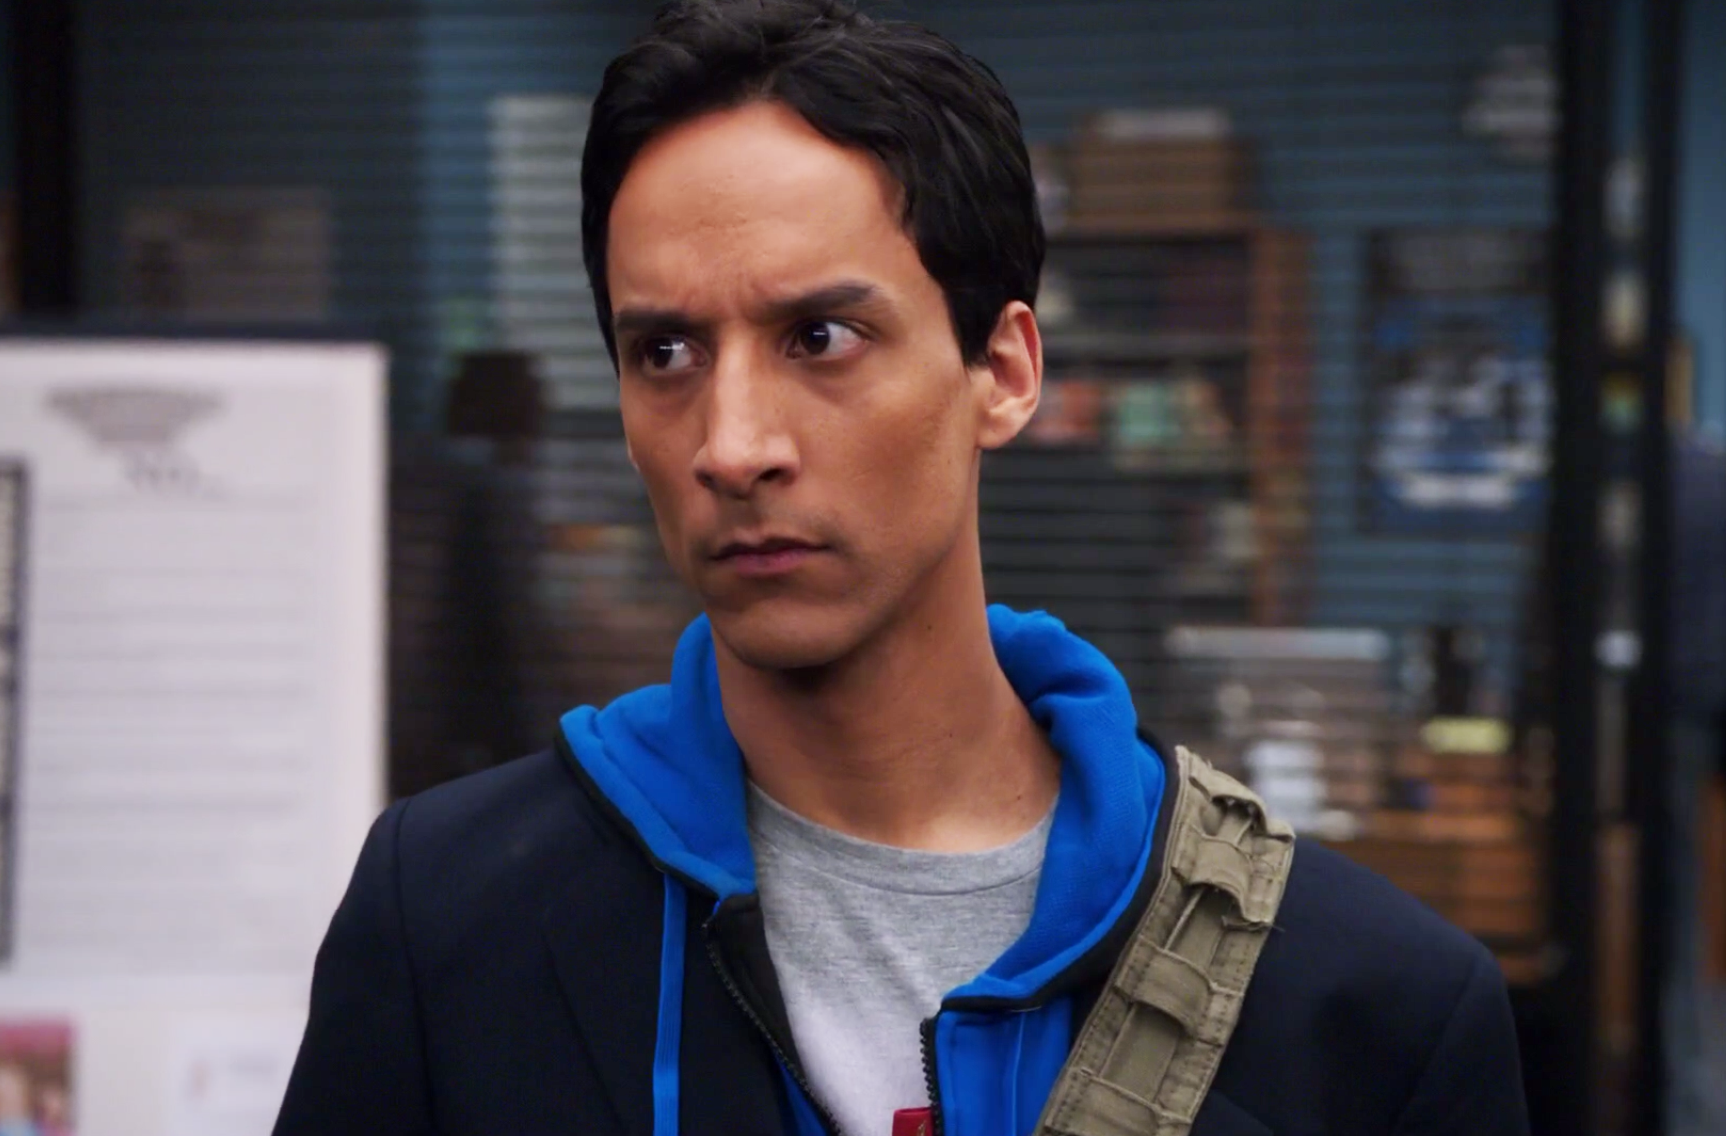 Abed Community